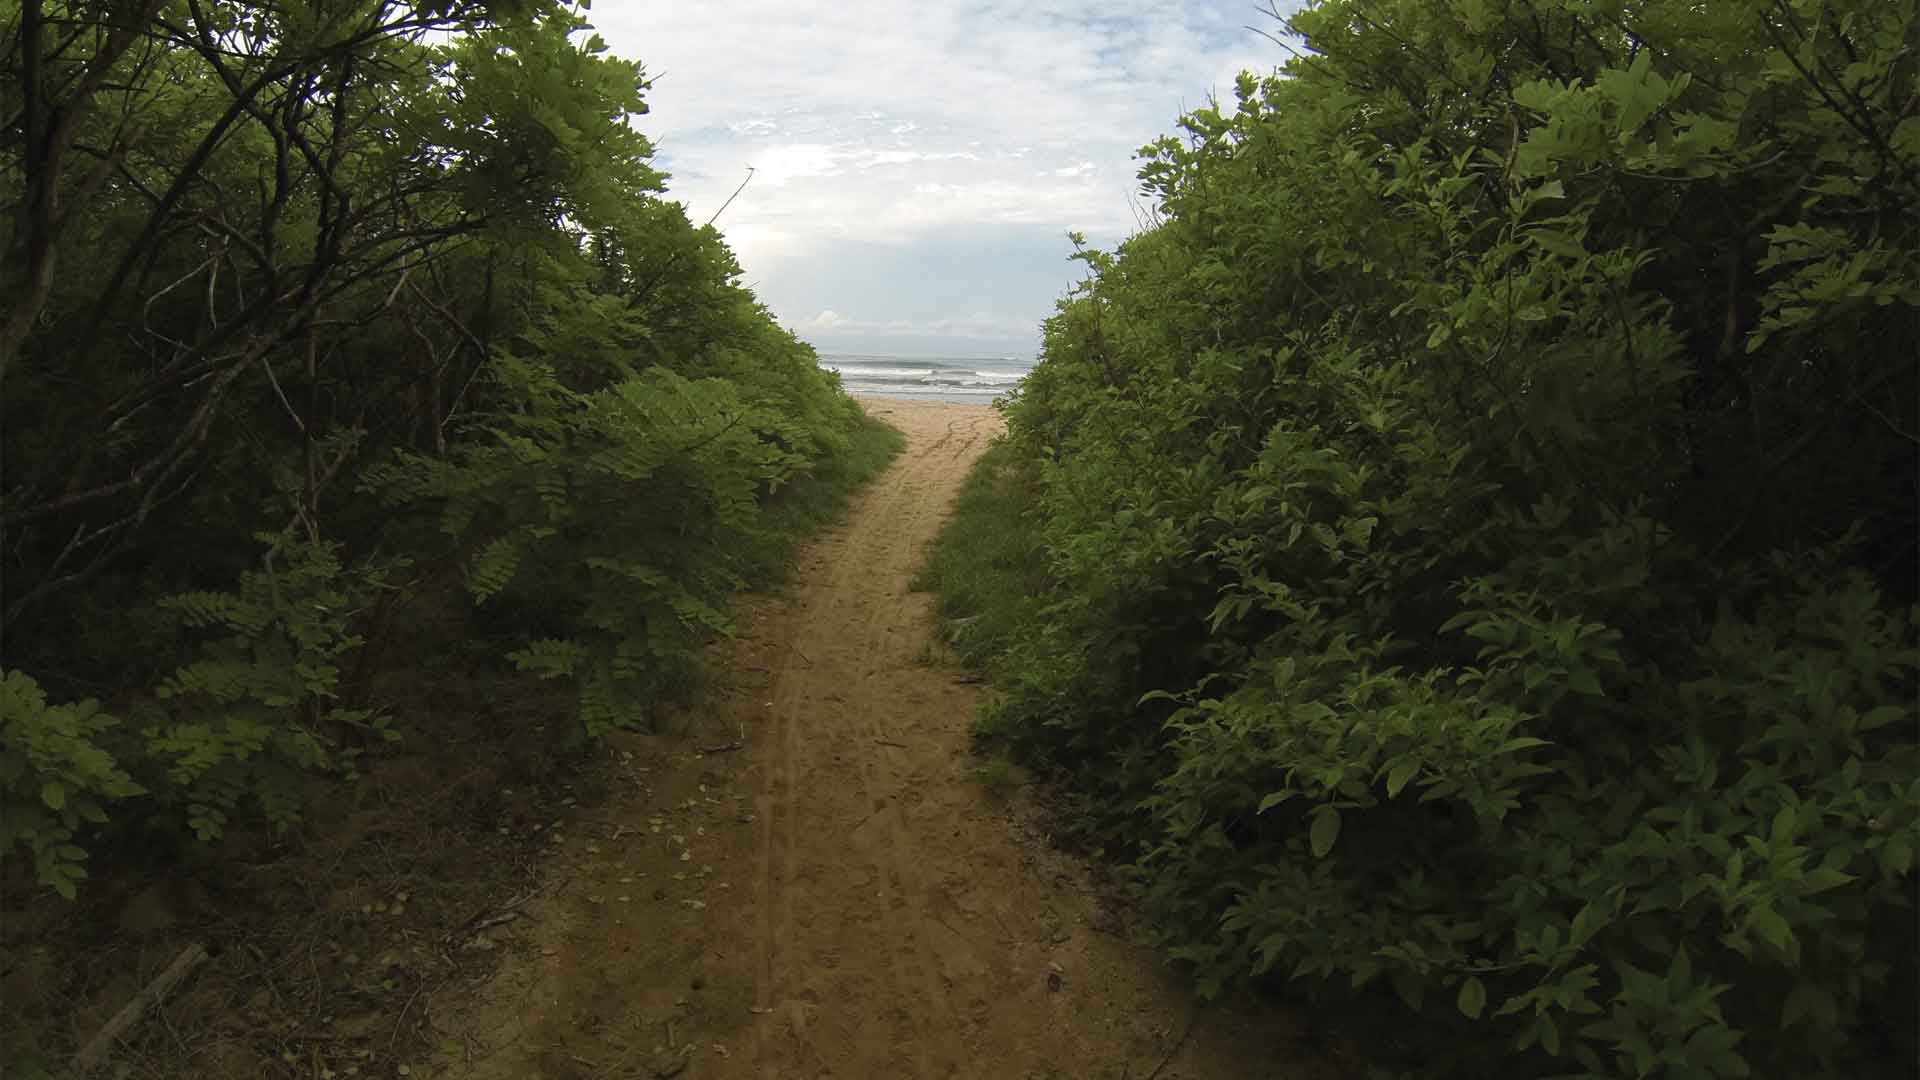 Sandy walkway through green bushes leading to waves at Playa Grande beach in Costa Rica